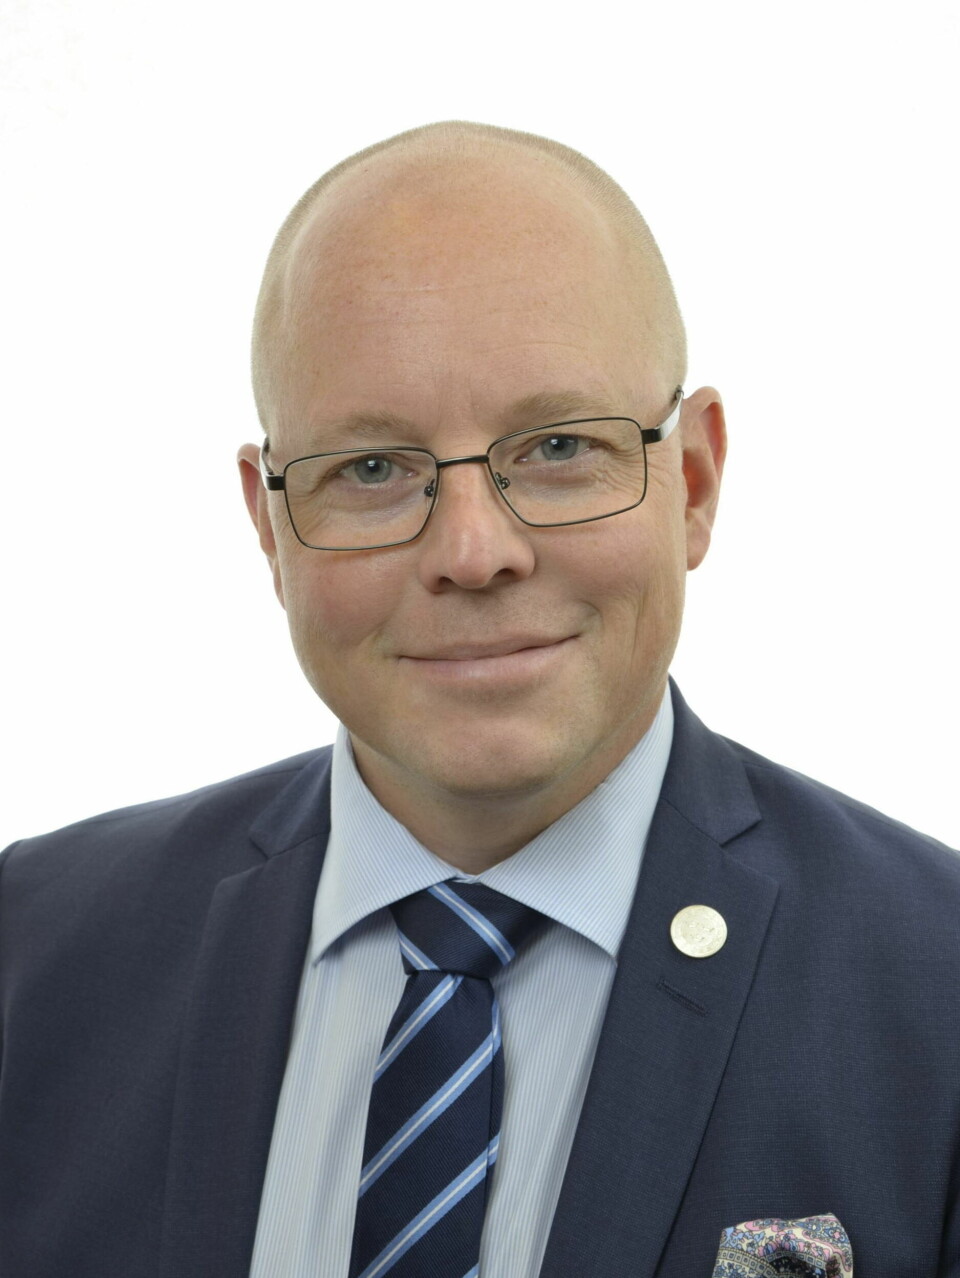 Sverigedemokraternas riksdagsmedlem Björn Söders påstand om at pride har koblinger til pedofili har utløst bråk i parlamentet i Sverige.